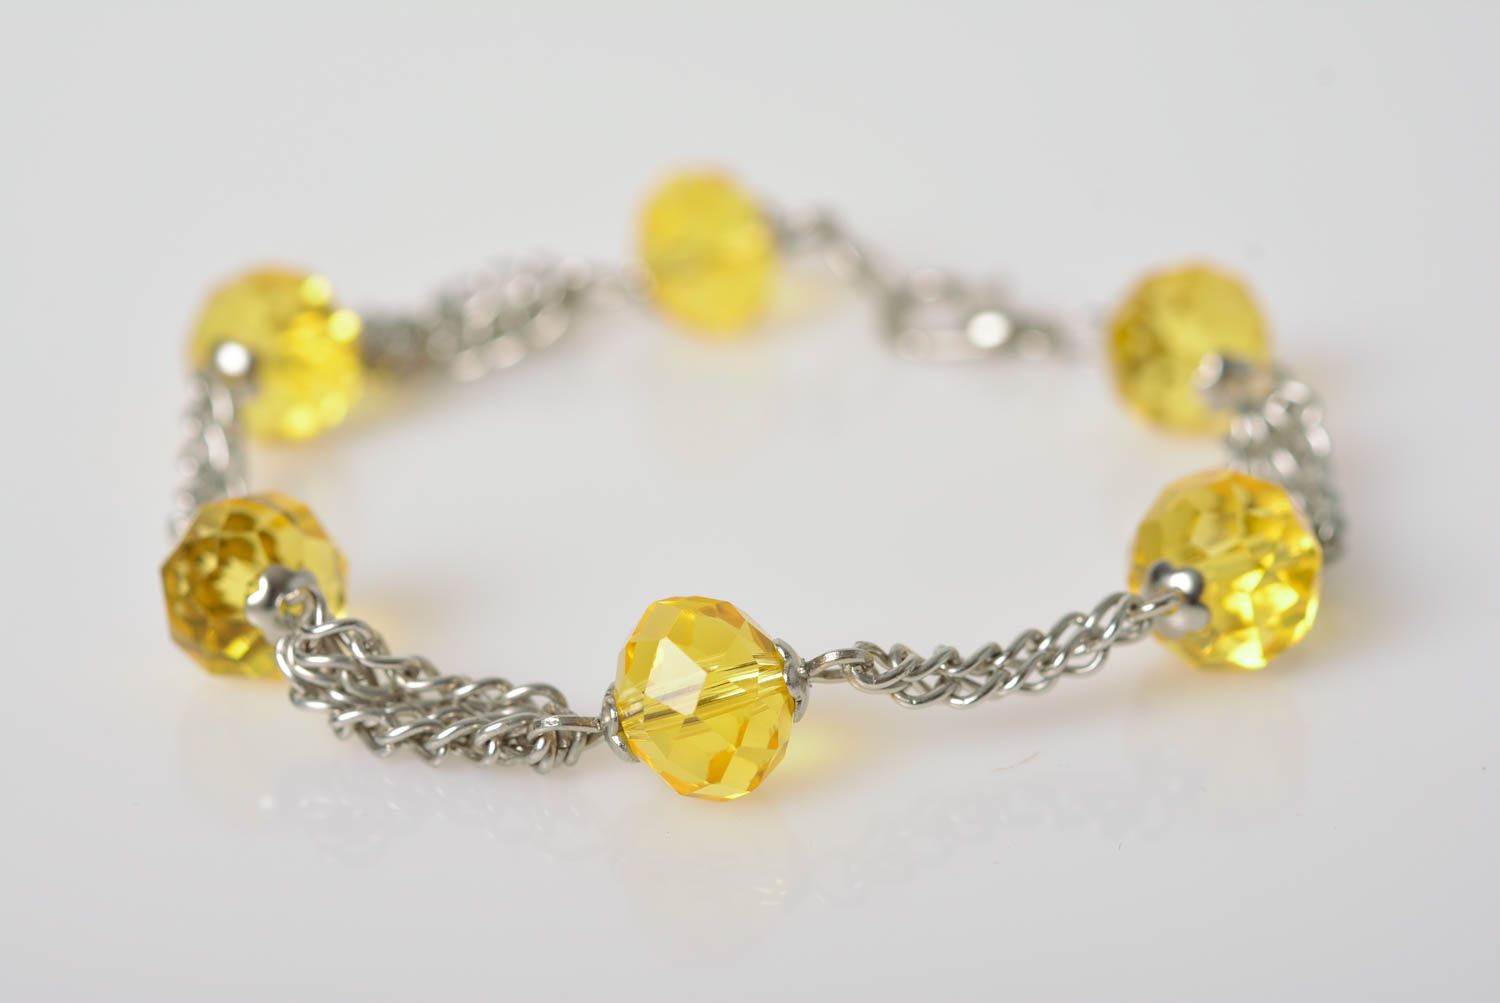 Handmade designer wrist bracelet with yellow glass beads and metal chain photo 1